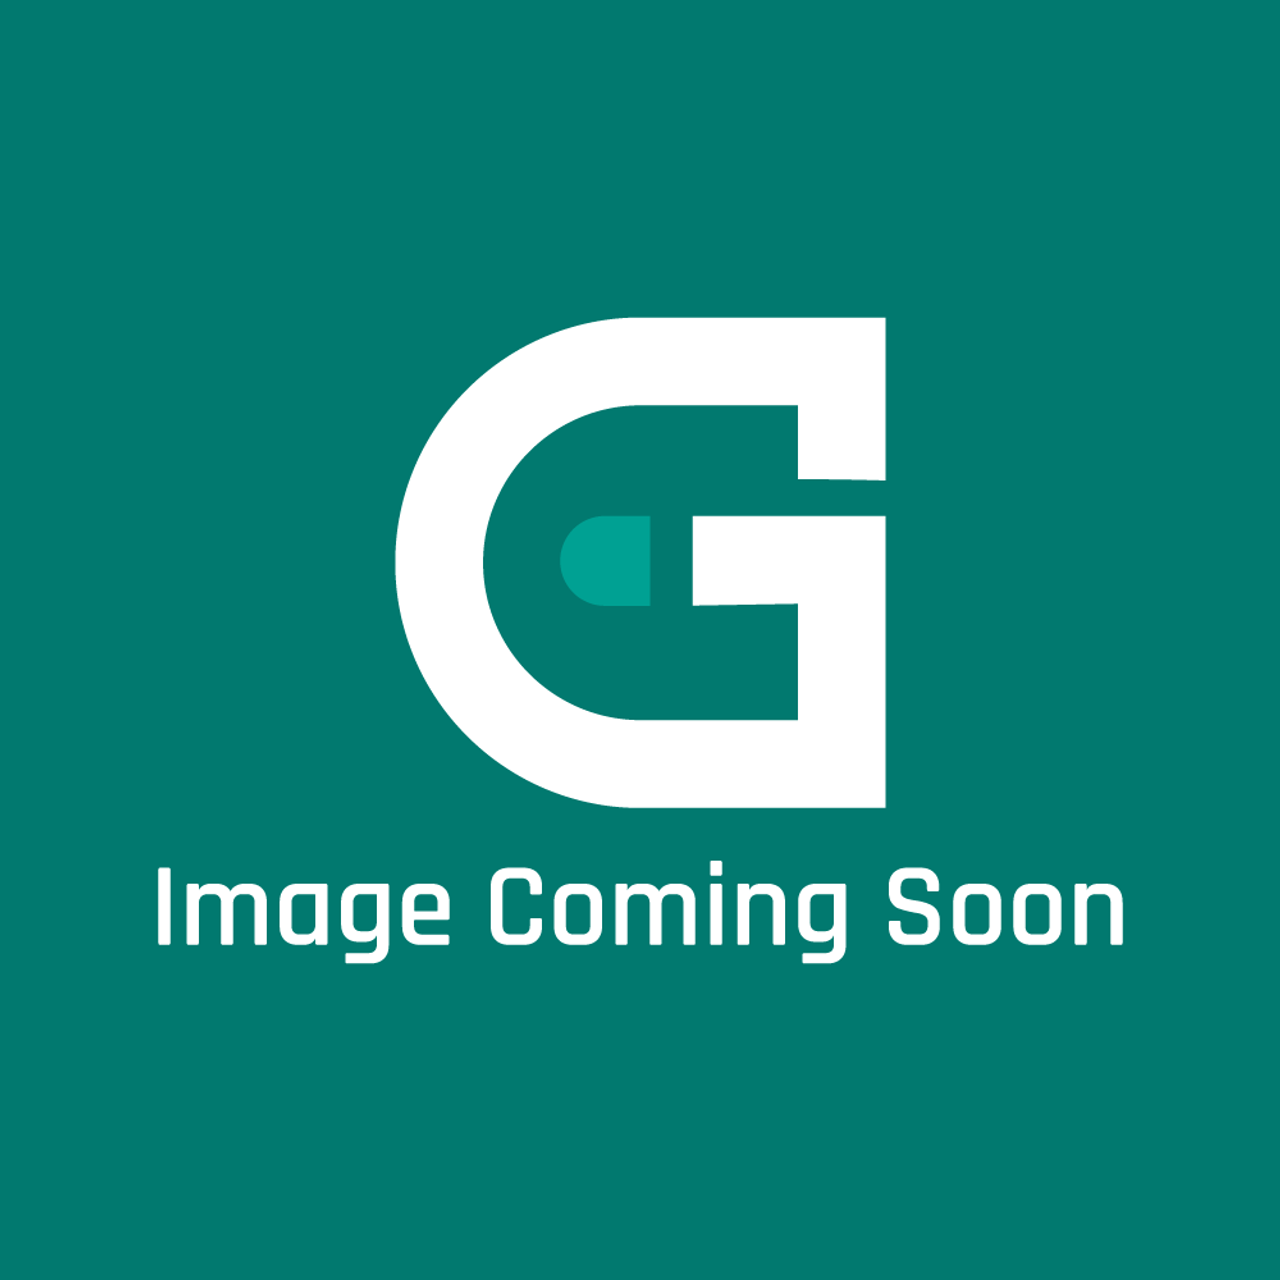 AGA Marvel S42228039 - S/A-Carton Inner Pack-Ml24Brg - Image Coming Soon!